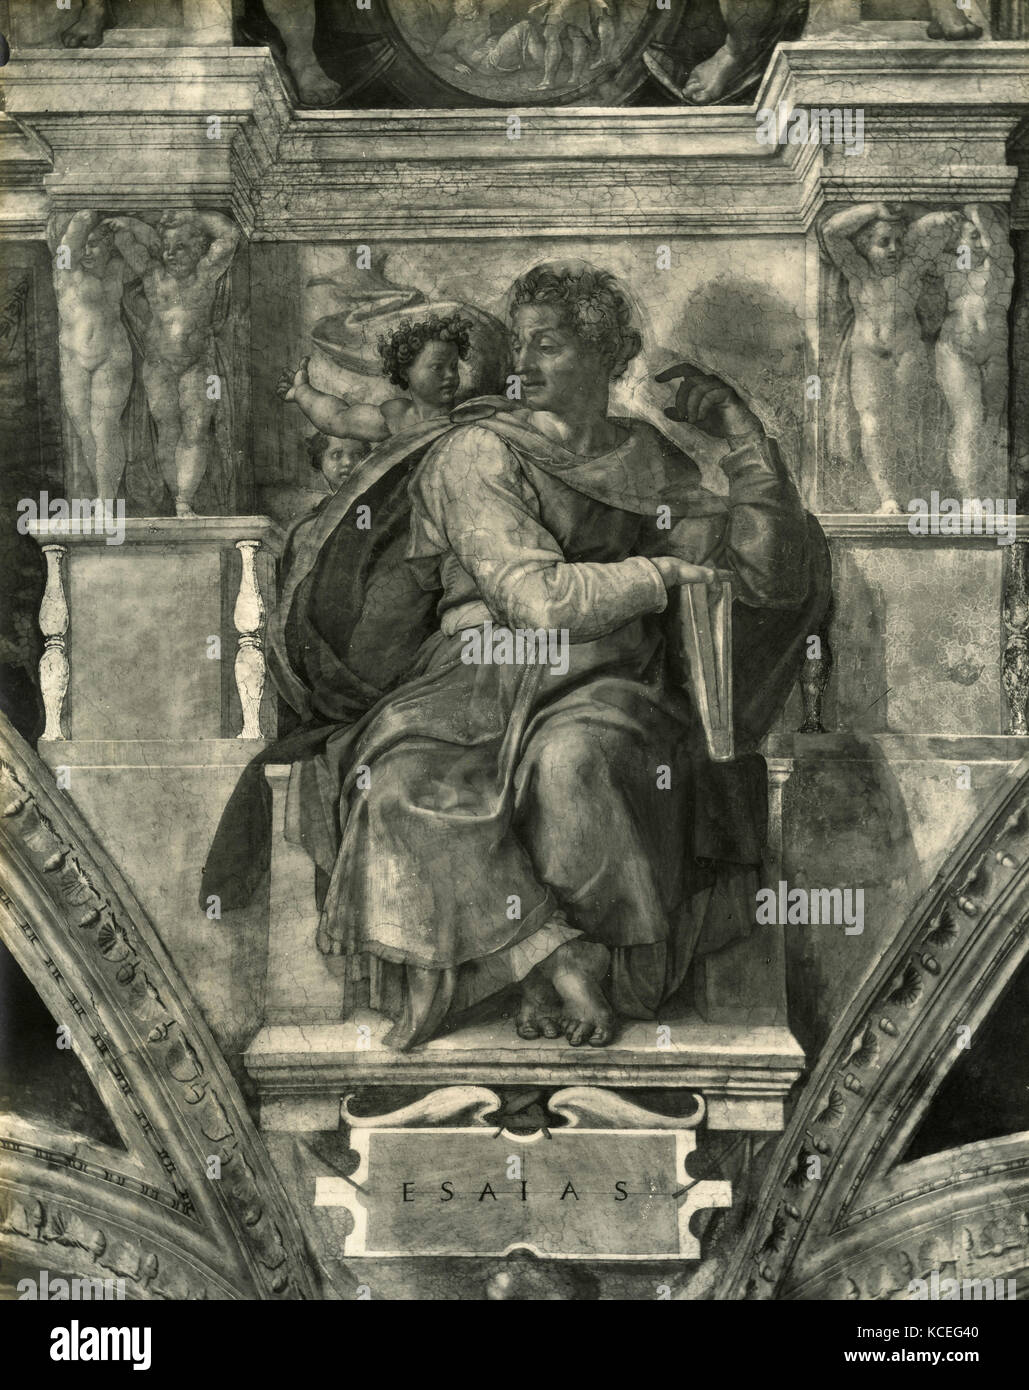 Prophet Jesaja, Fresko von Michelangelo, Sixtinische Kapelle Stockfoto